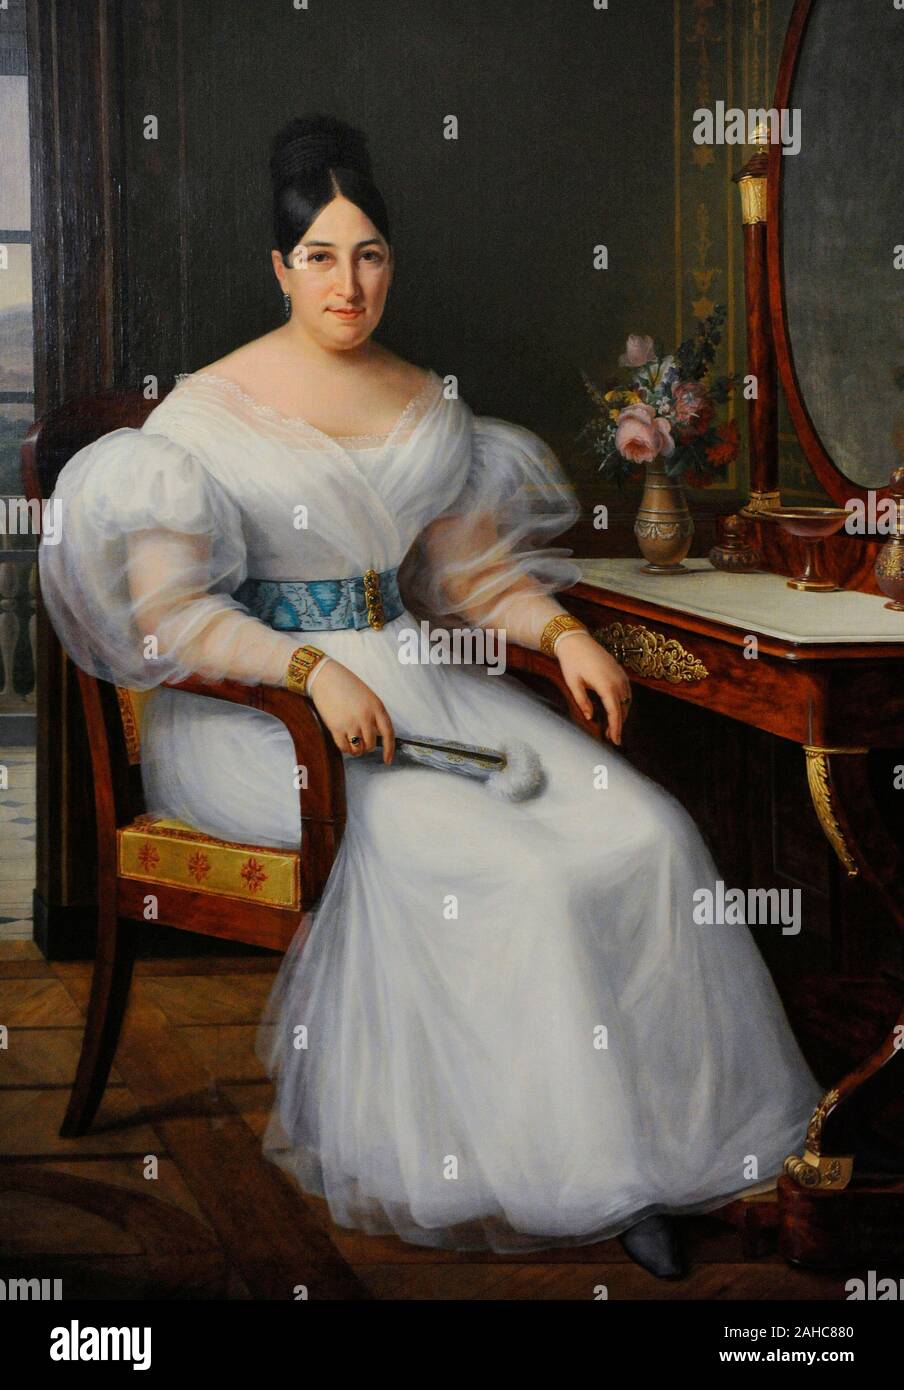 Francisco Lacoma y Fontanet (1784-1849). Spanischer Maler. Portrait von Carmen Moreno, Marchesa von Las Marismas del Guadalquivir, 1833. Museum der Romantik. Madrid. Spanien. Stockfoto